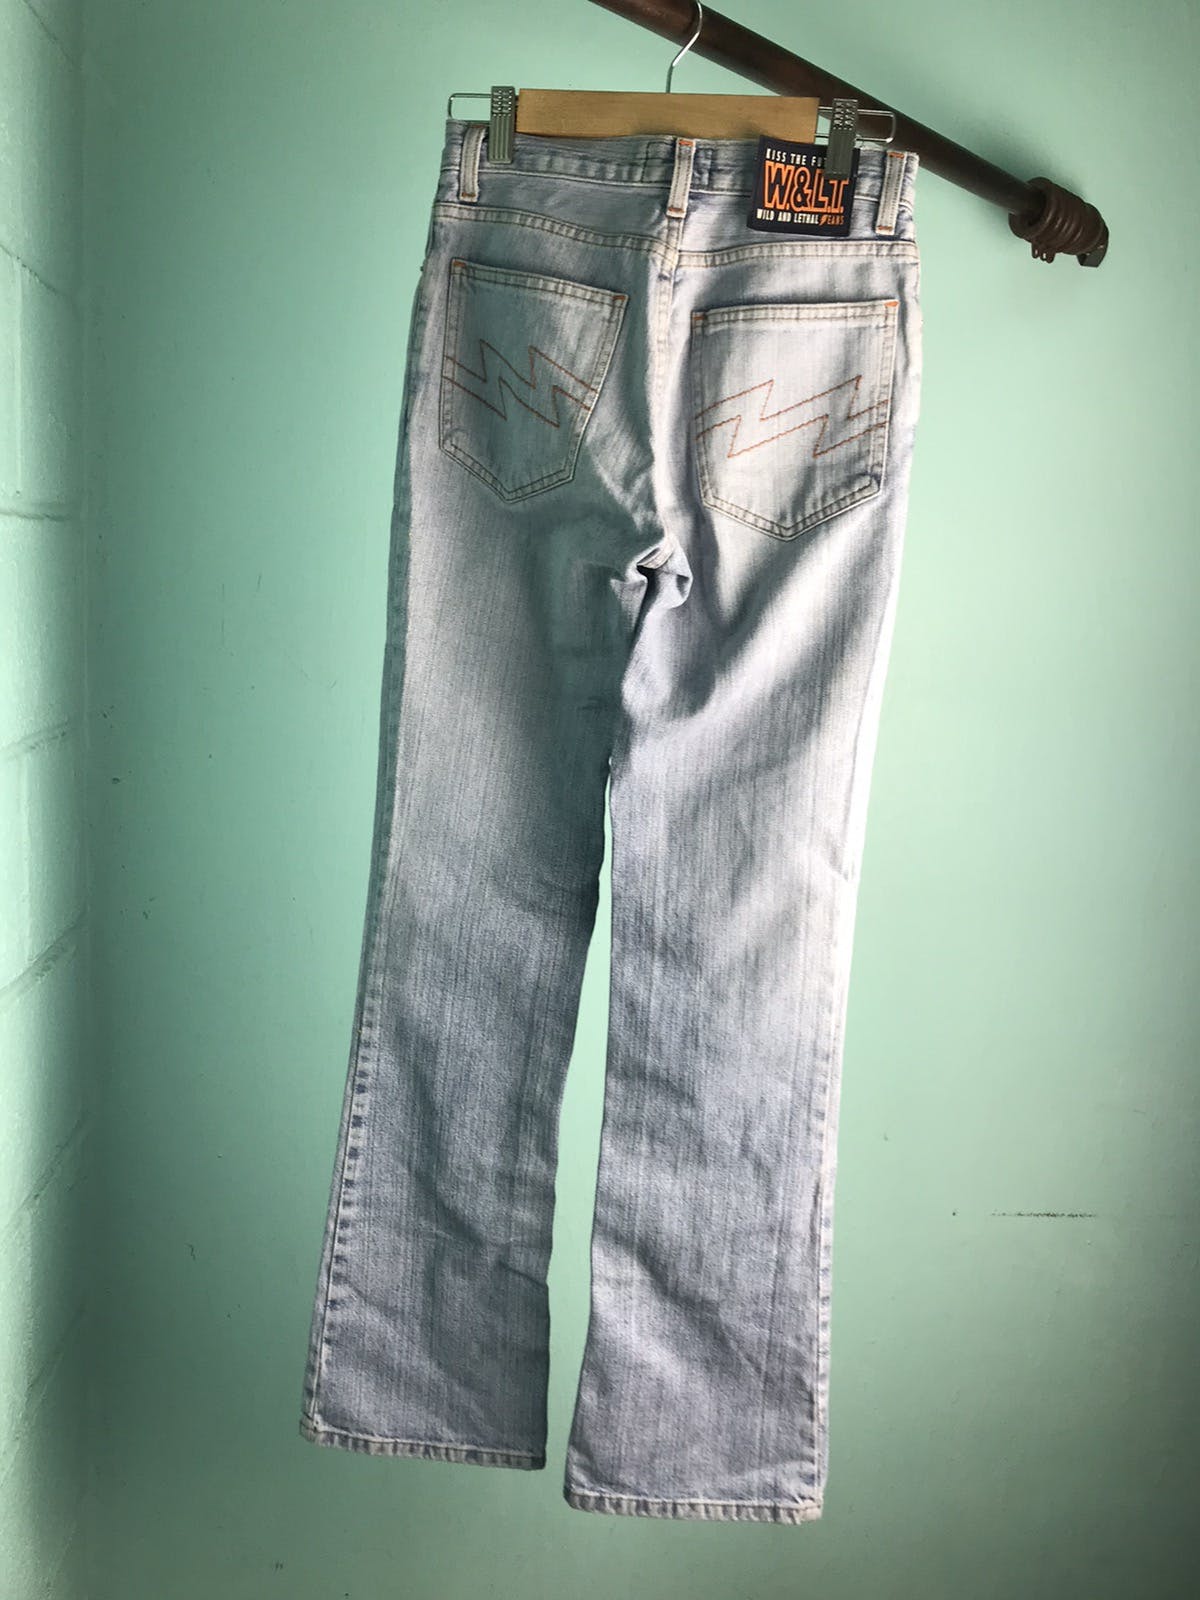 Vintage W&lt Denim Jeans - 7